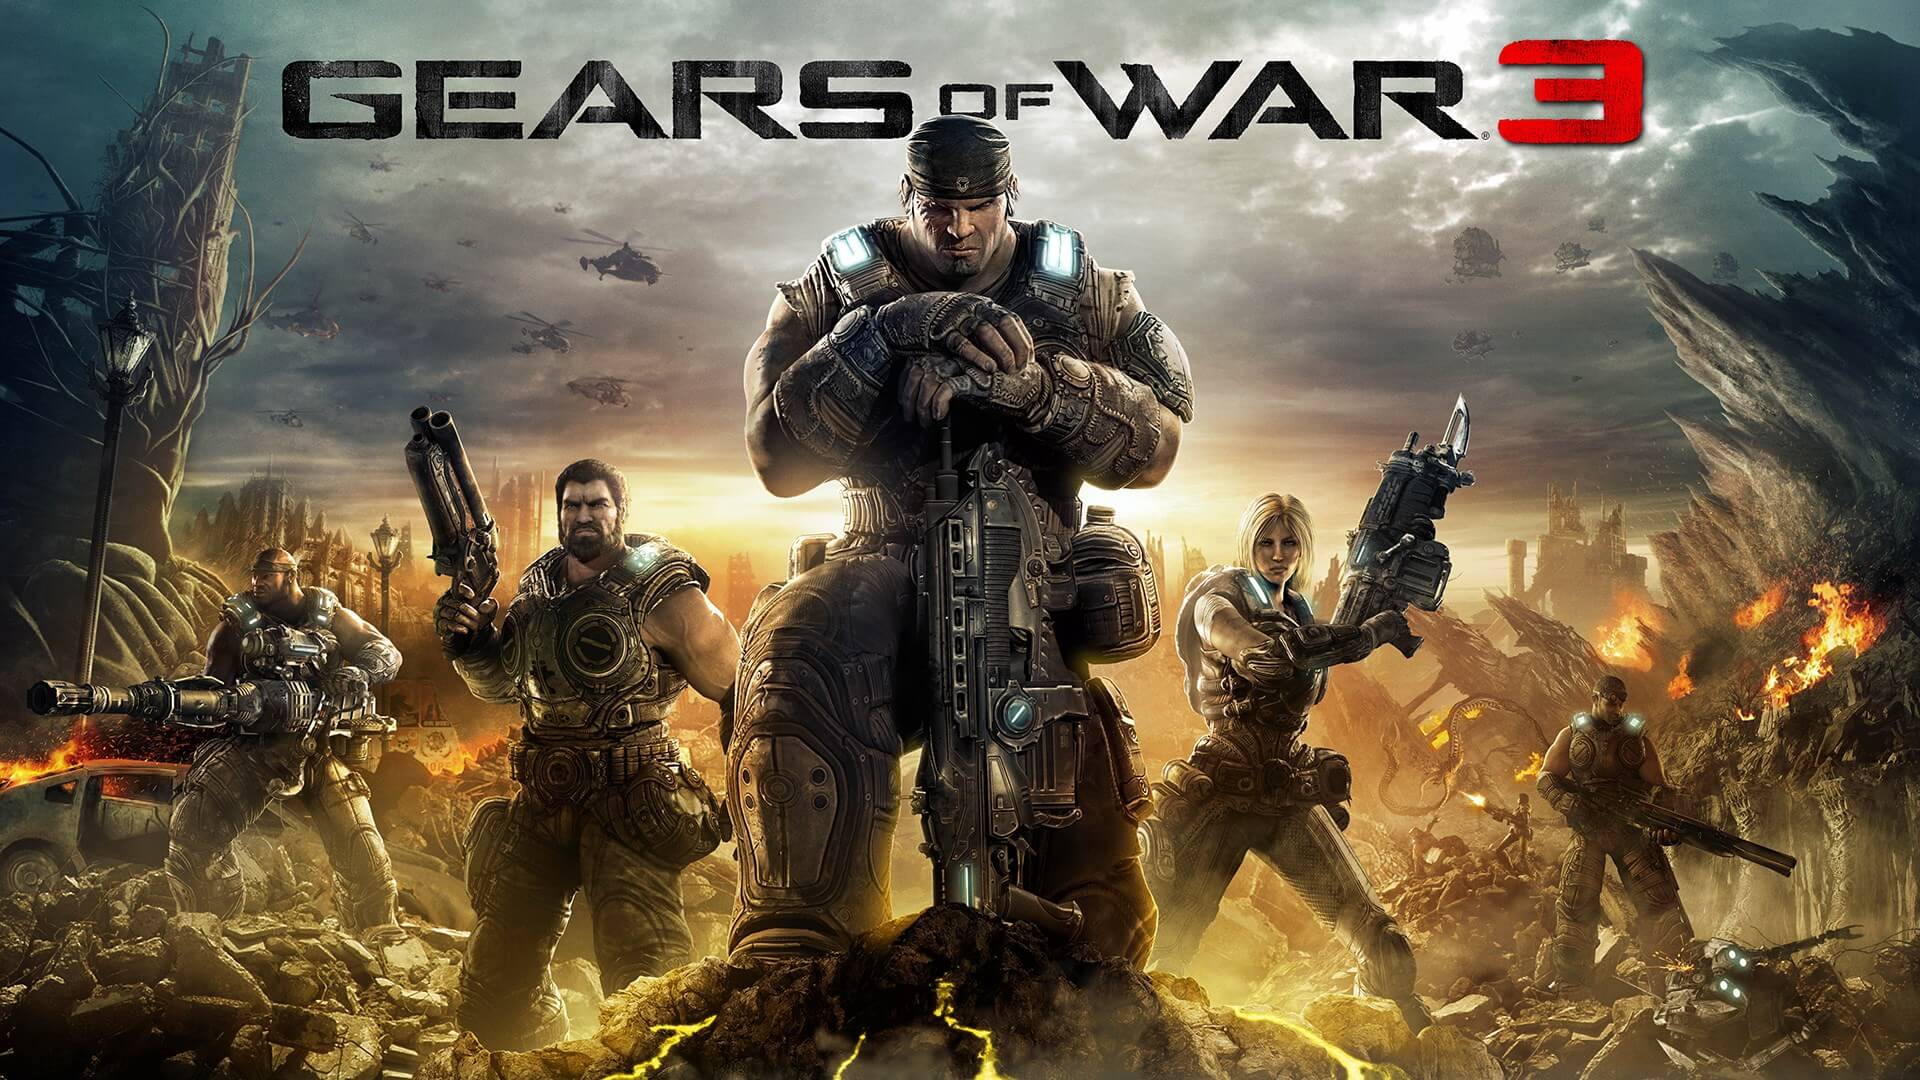 Gears of War – Original vs. Ultimate Edition Screenshots Graphics  Comparison [60fps][FullHD] 